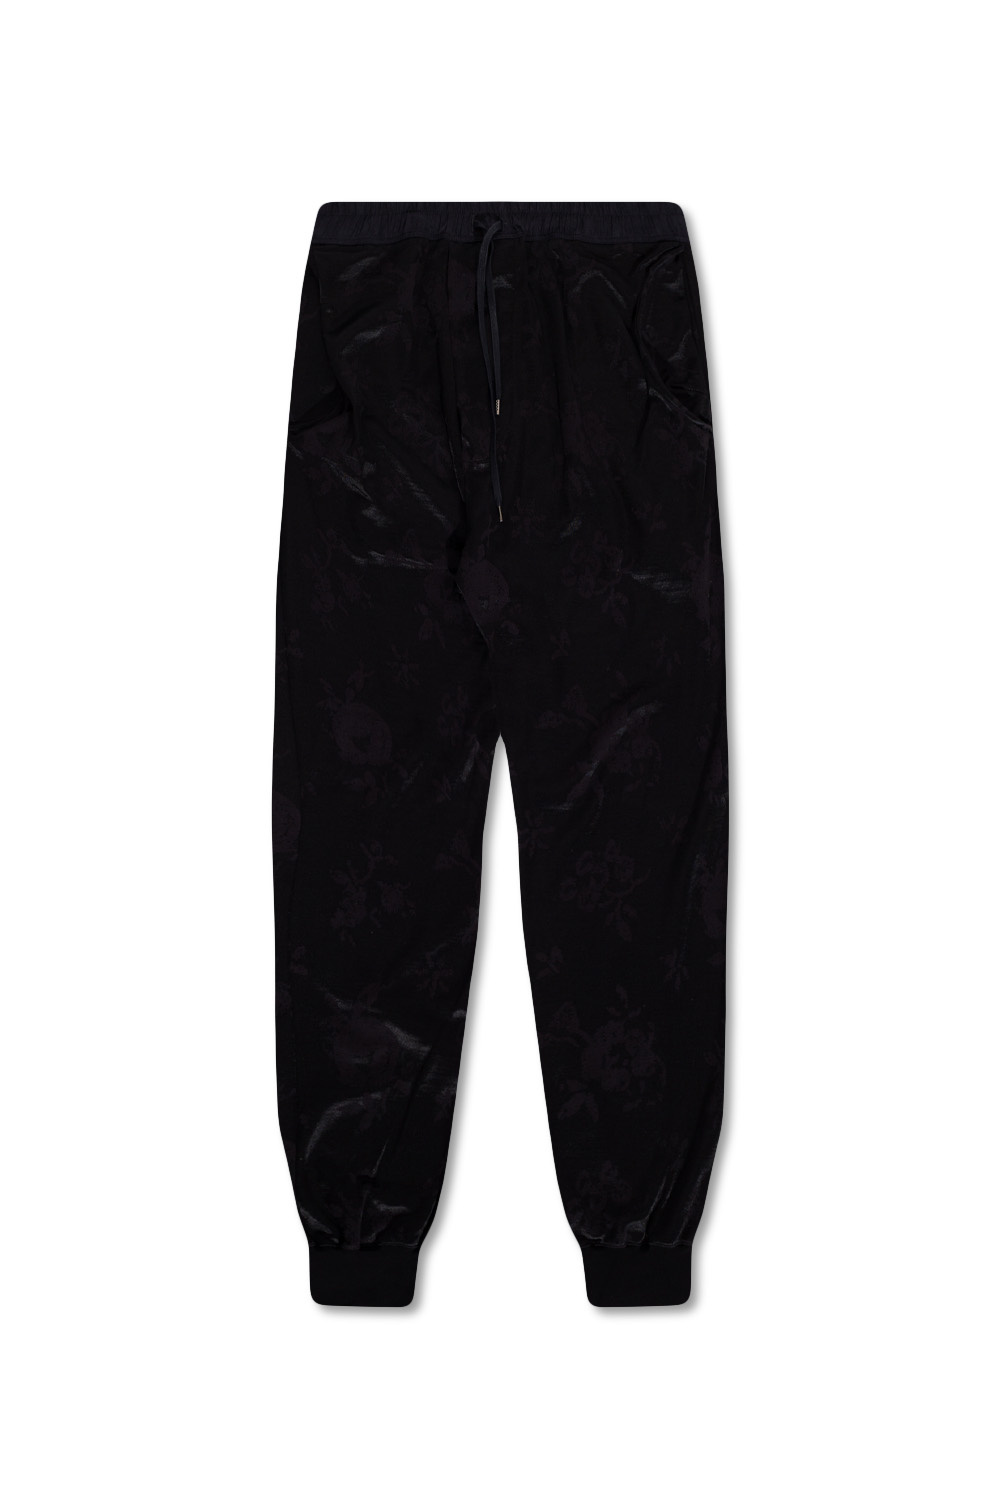 Vivienne Westwood ‘Drunken’ sweatpants with embroidered details